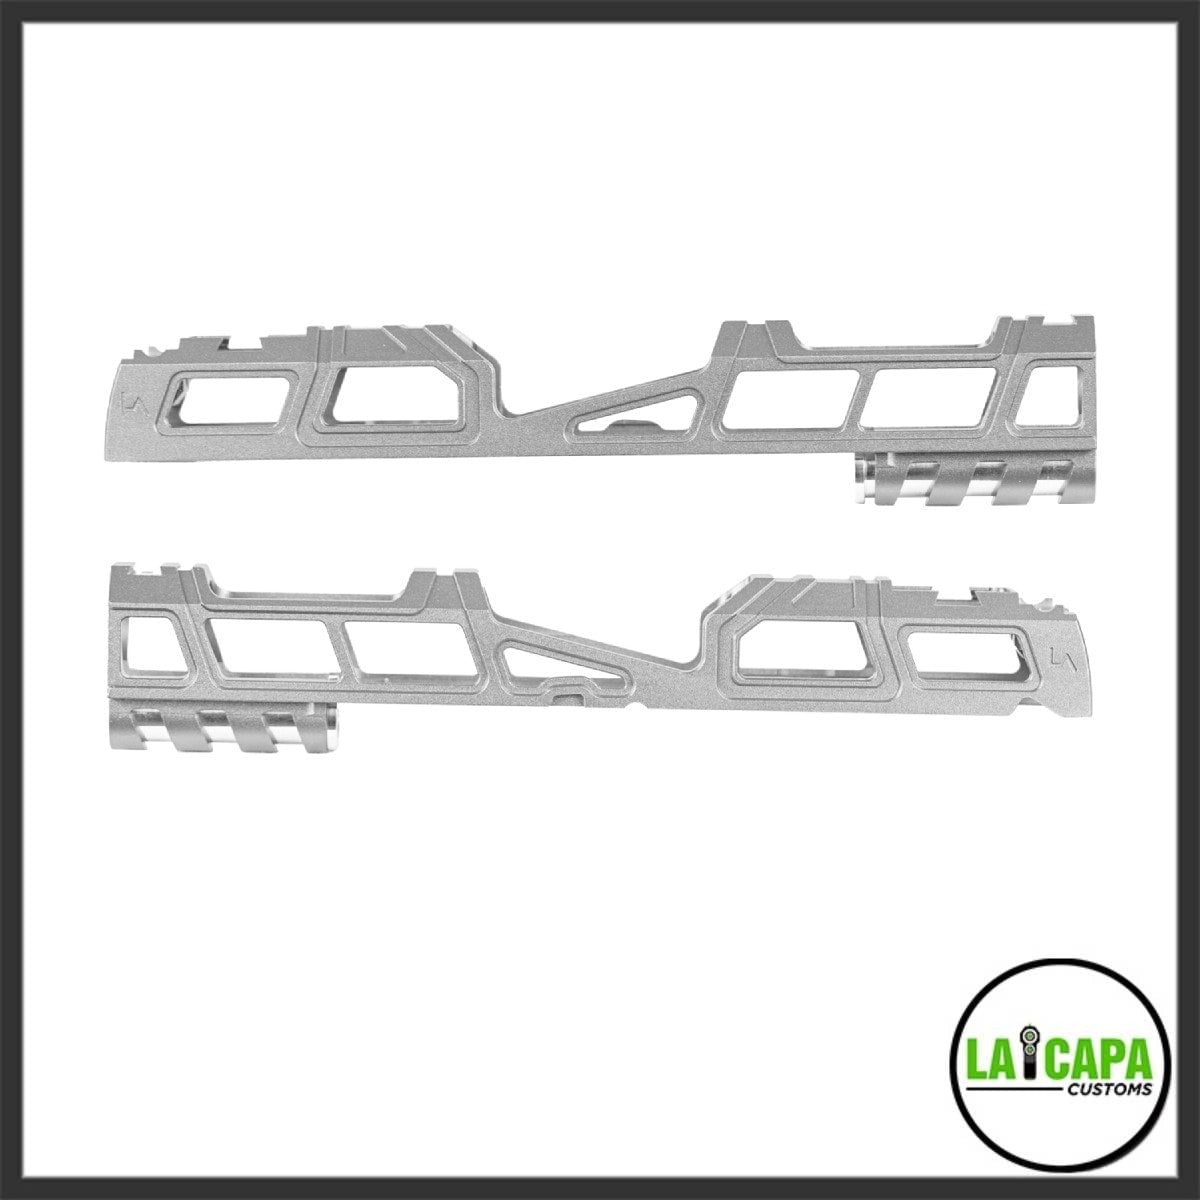 LA Capa Customs 5.1 “Hyper” Aluminum Slide - Silver